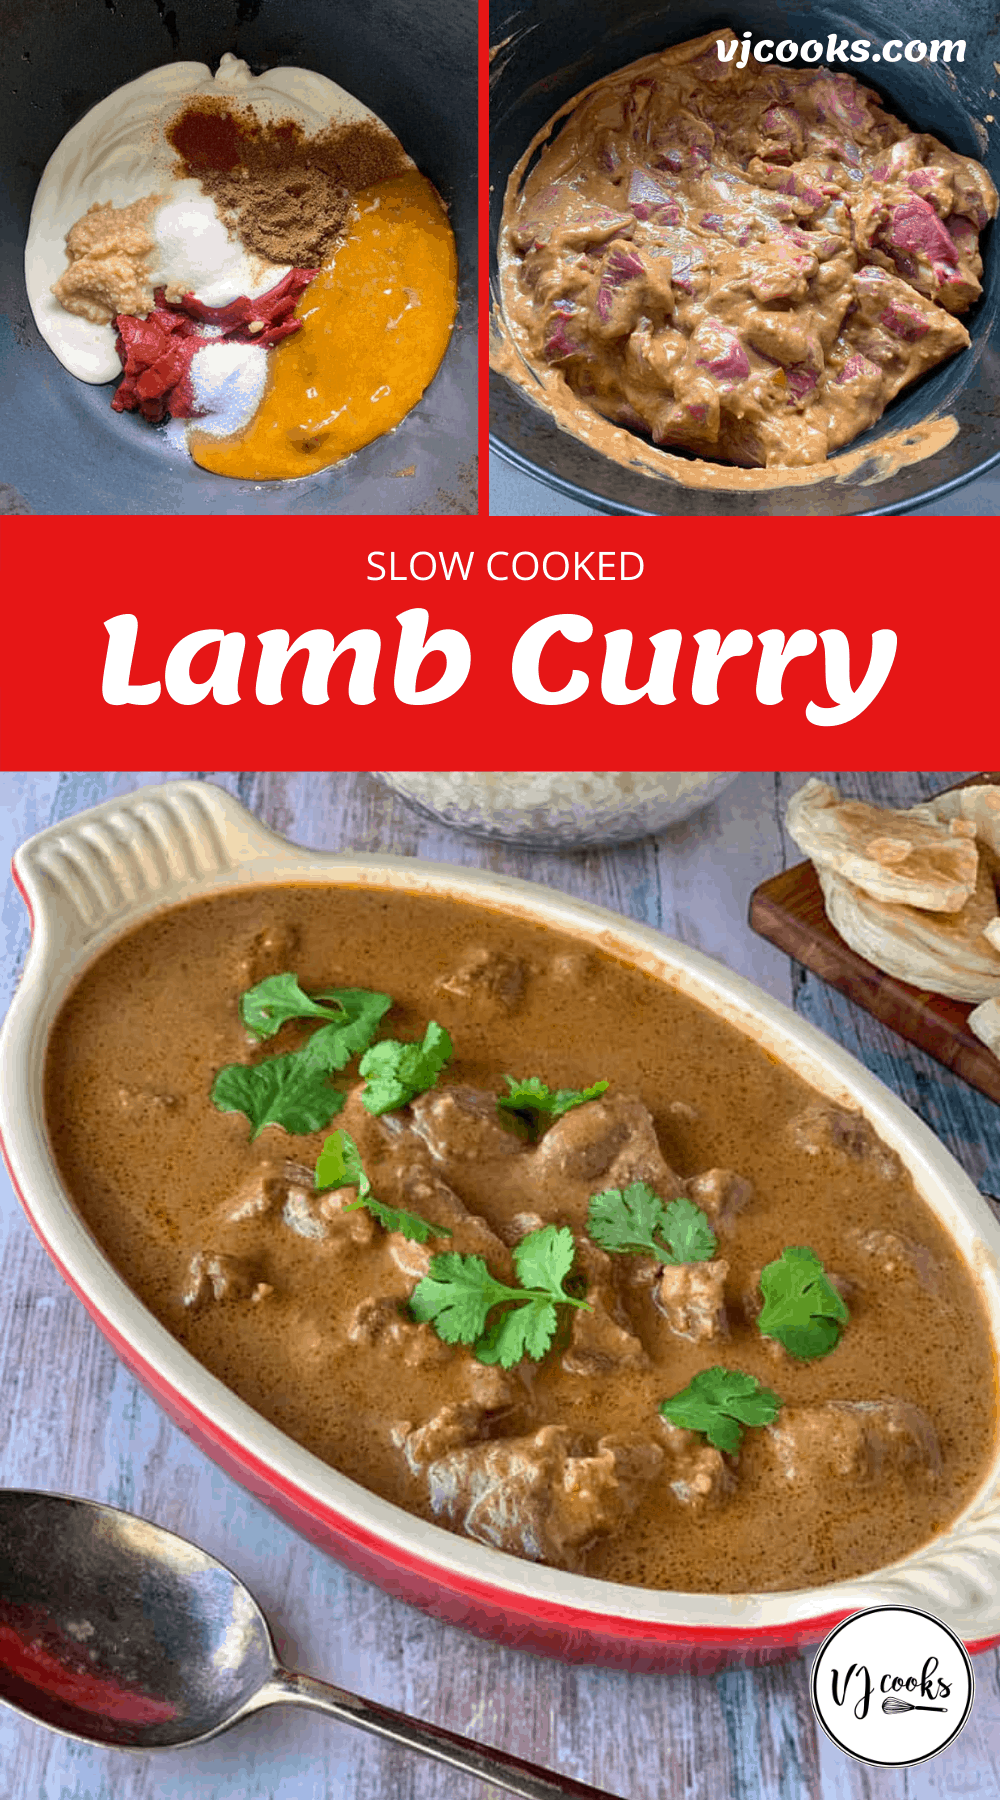 Lamb curry